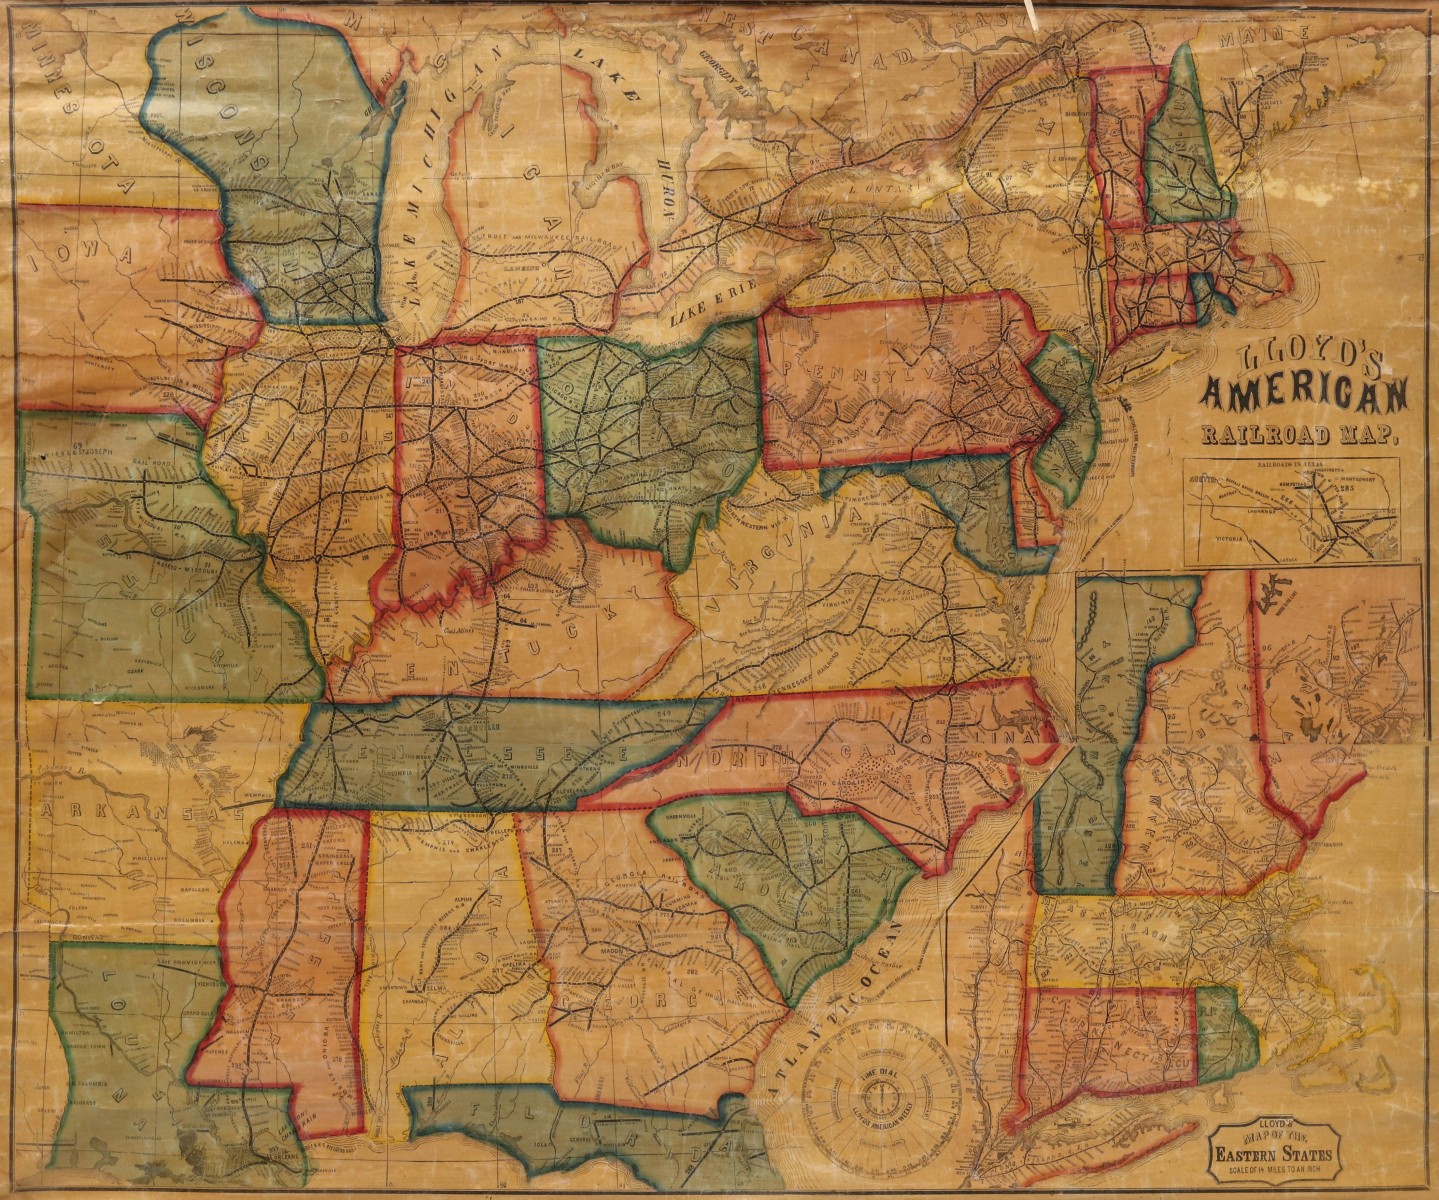 A 'LLOYD'S AMERICAN RAILROAD WALL MAP' DATED 1860